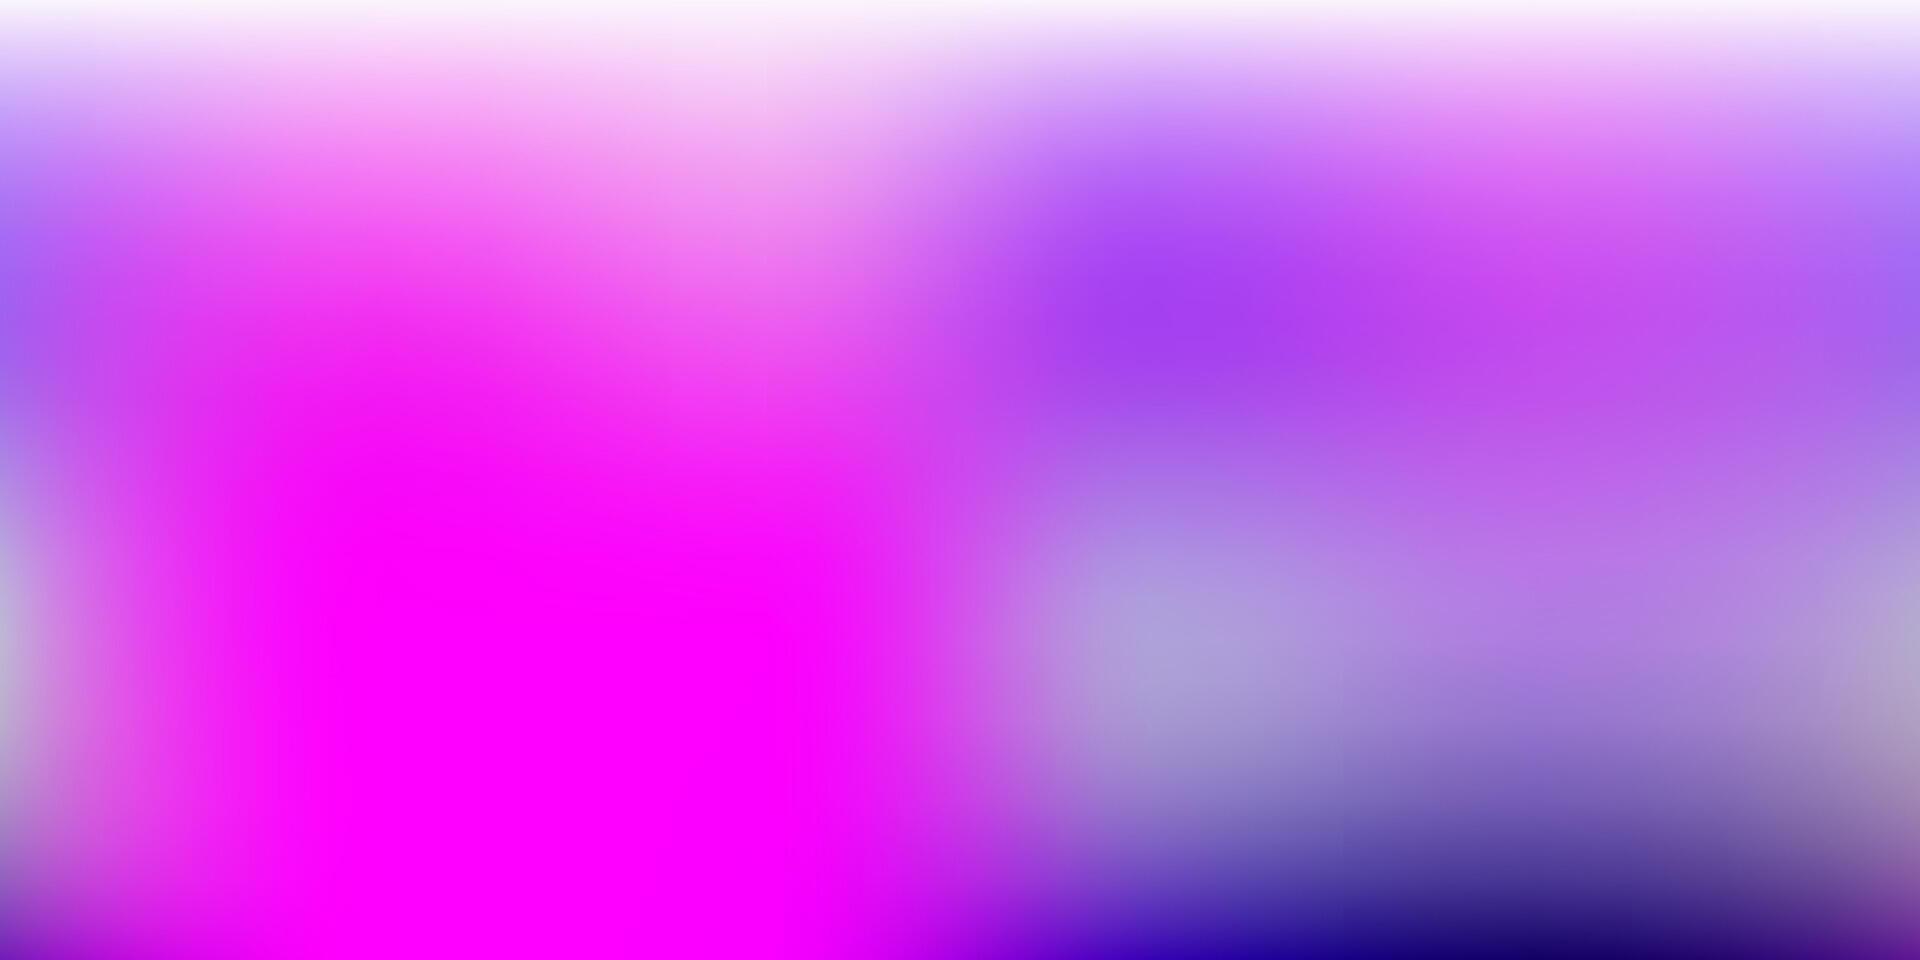 Dark Purple blur template. vector